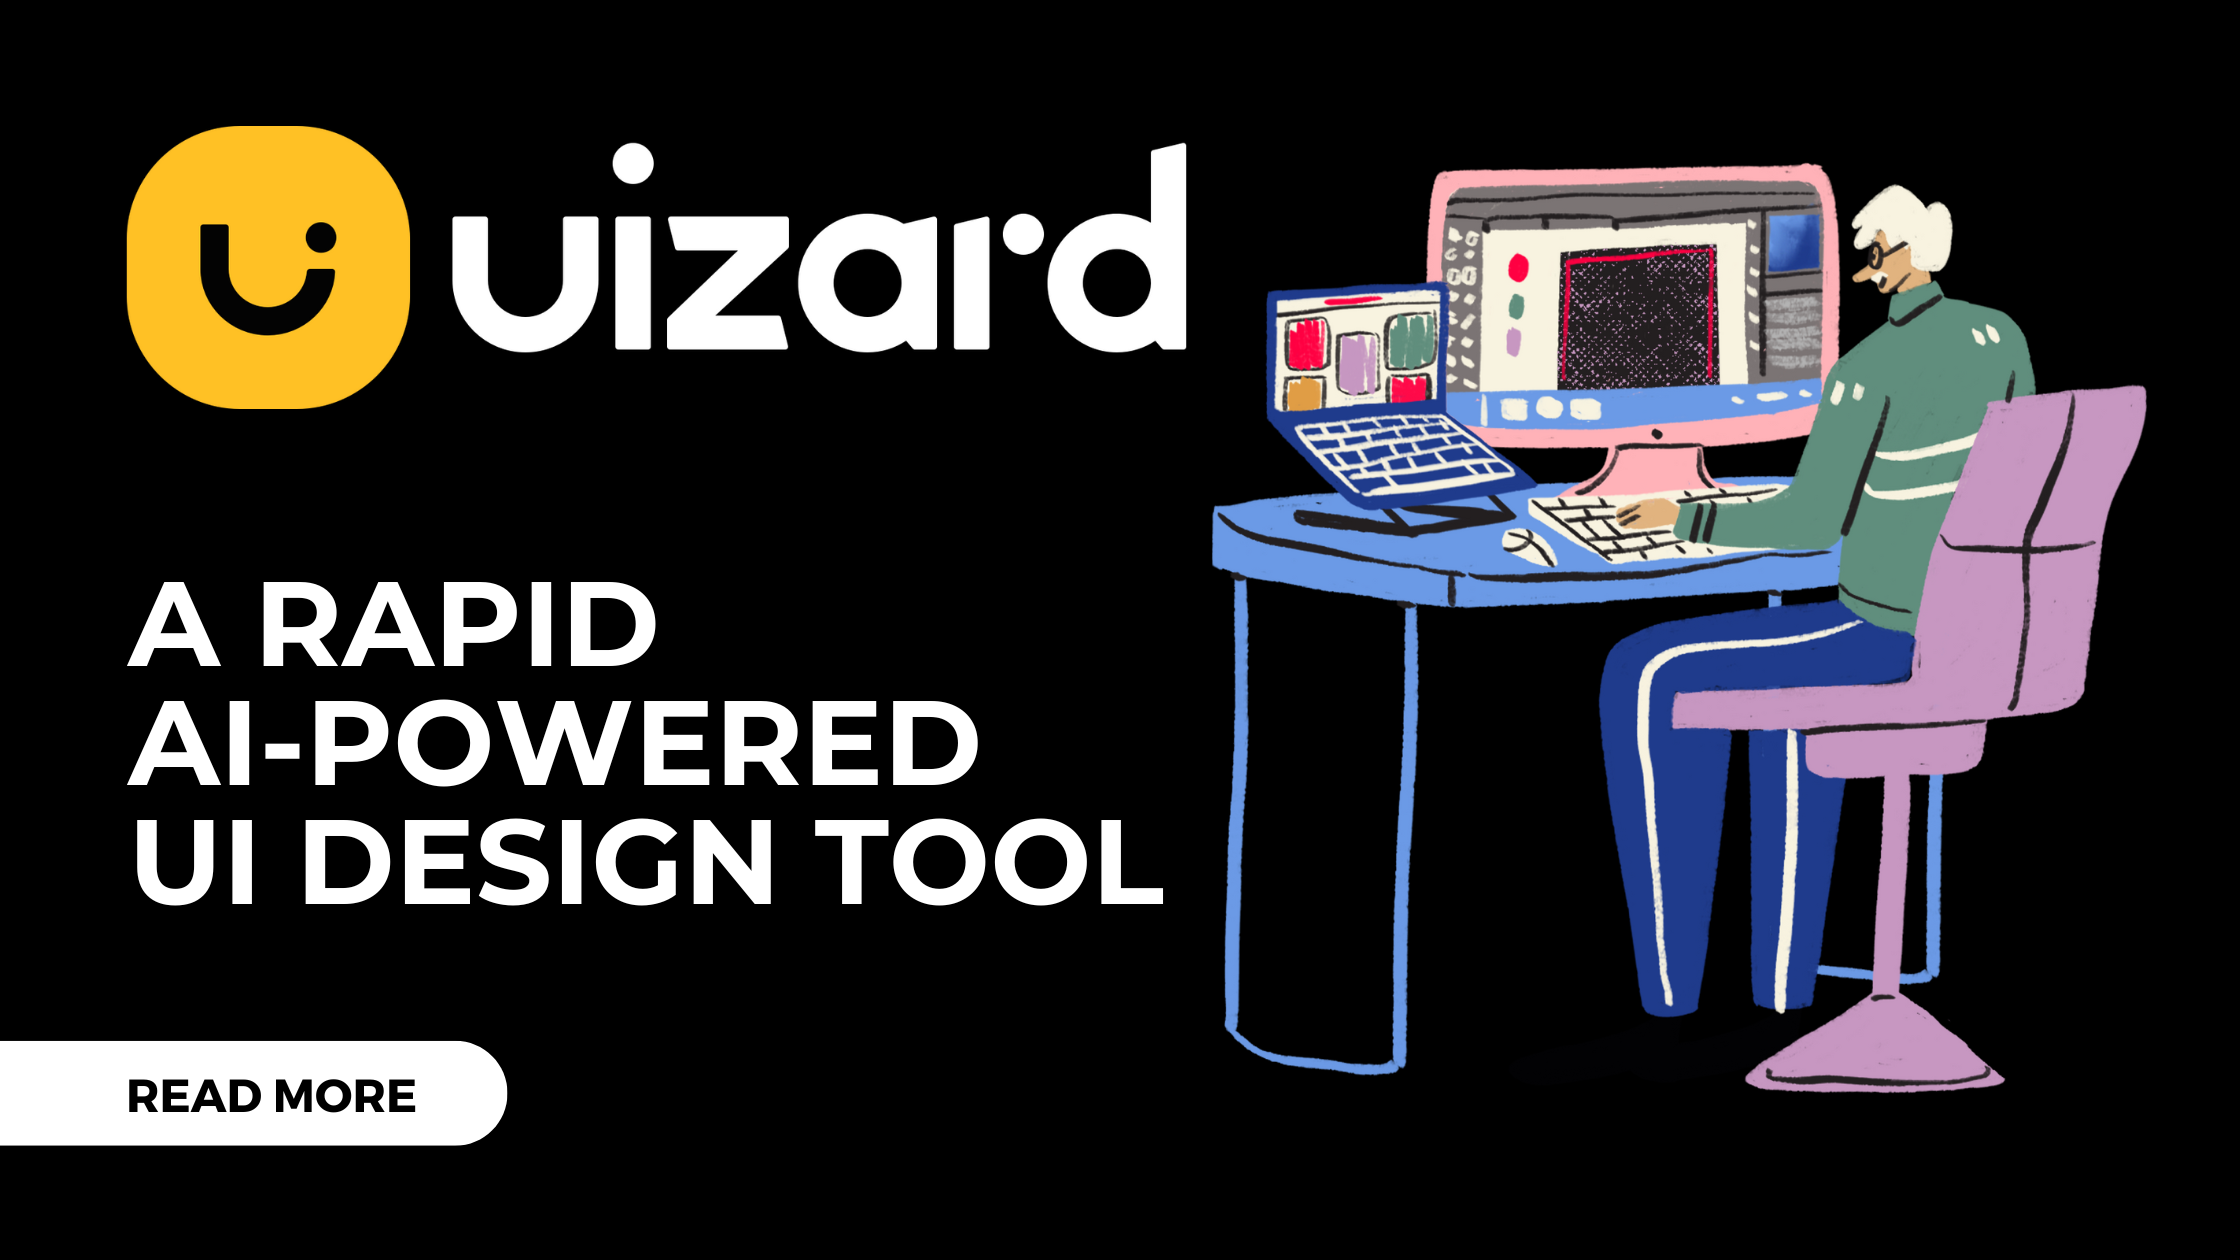 UIzard: A Rapid, AI-Powered UI Design Tool